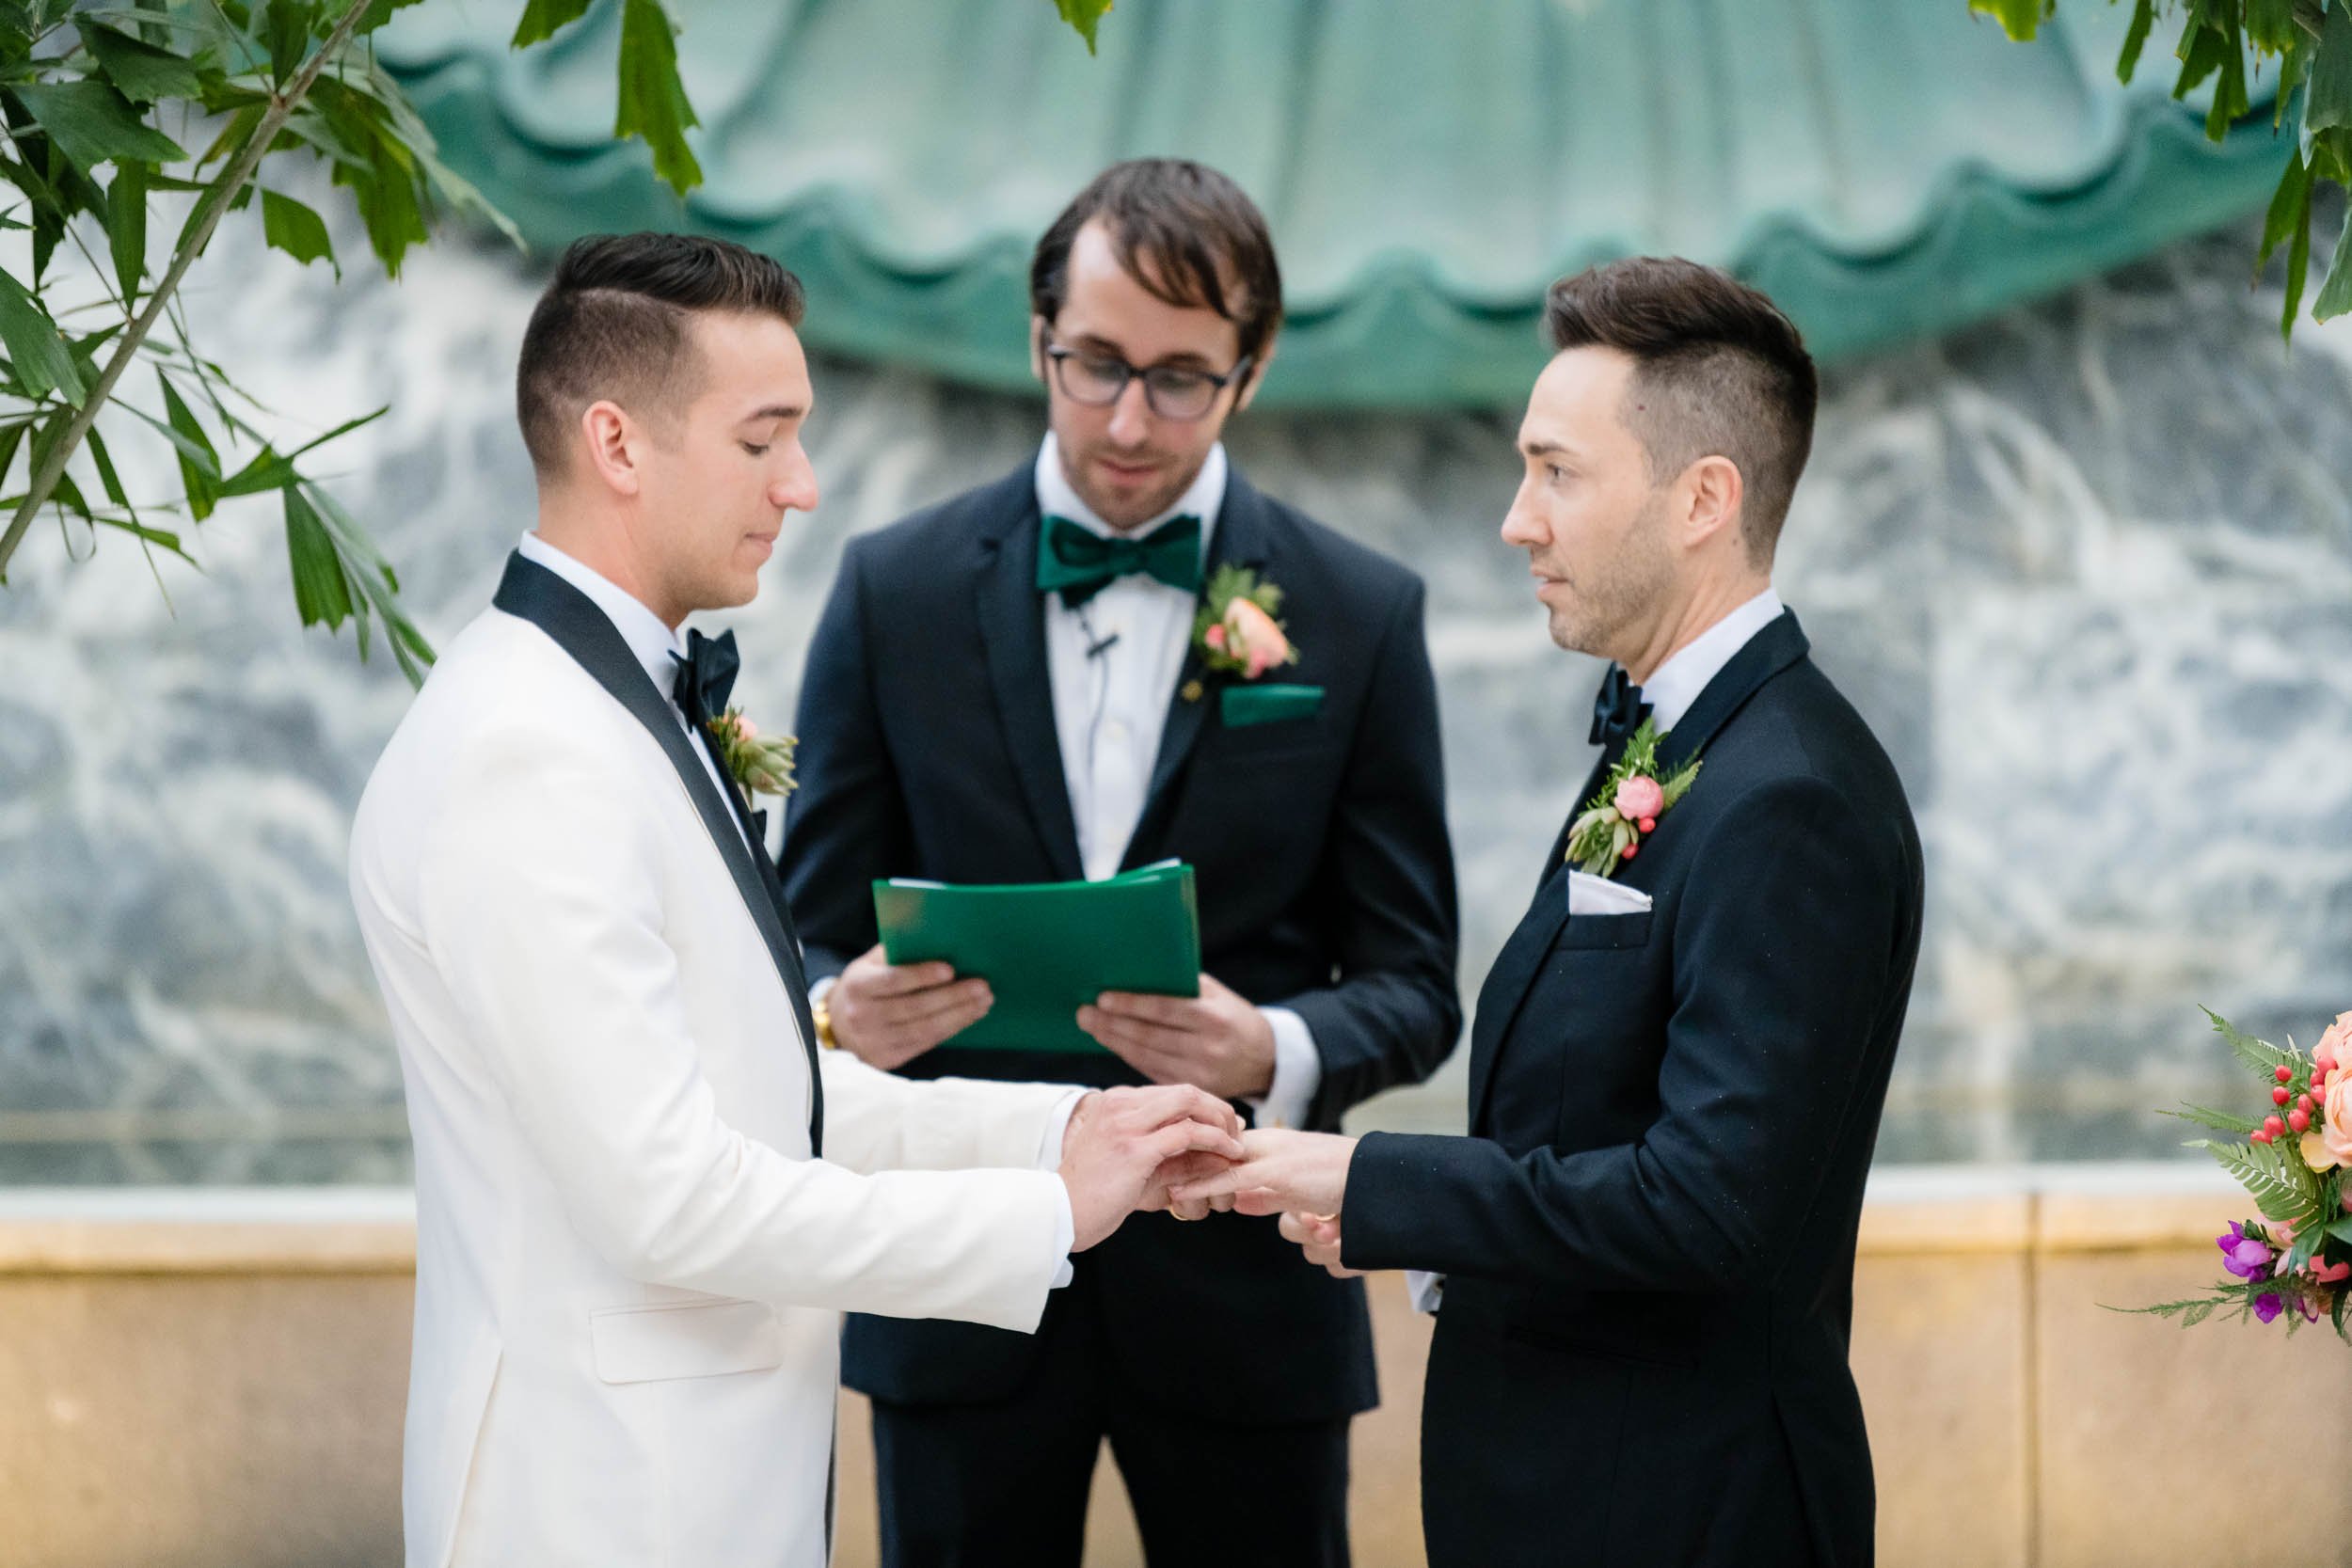 Pazzo's at 311 | Same sex wedding ceremony | Chicago IL